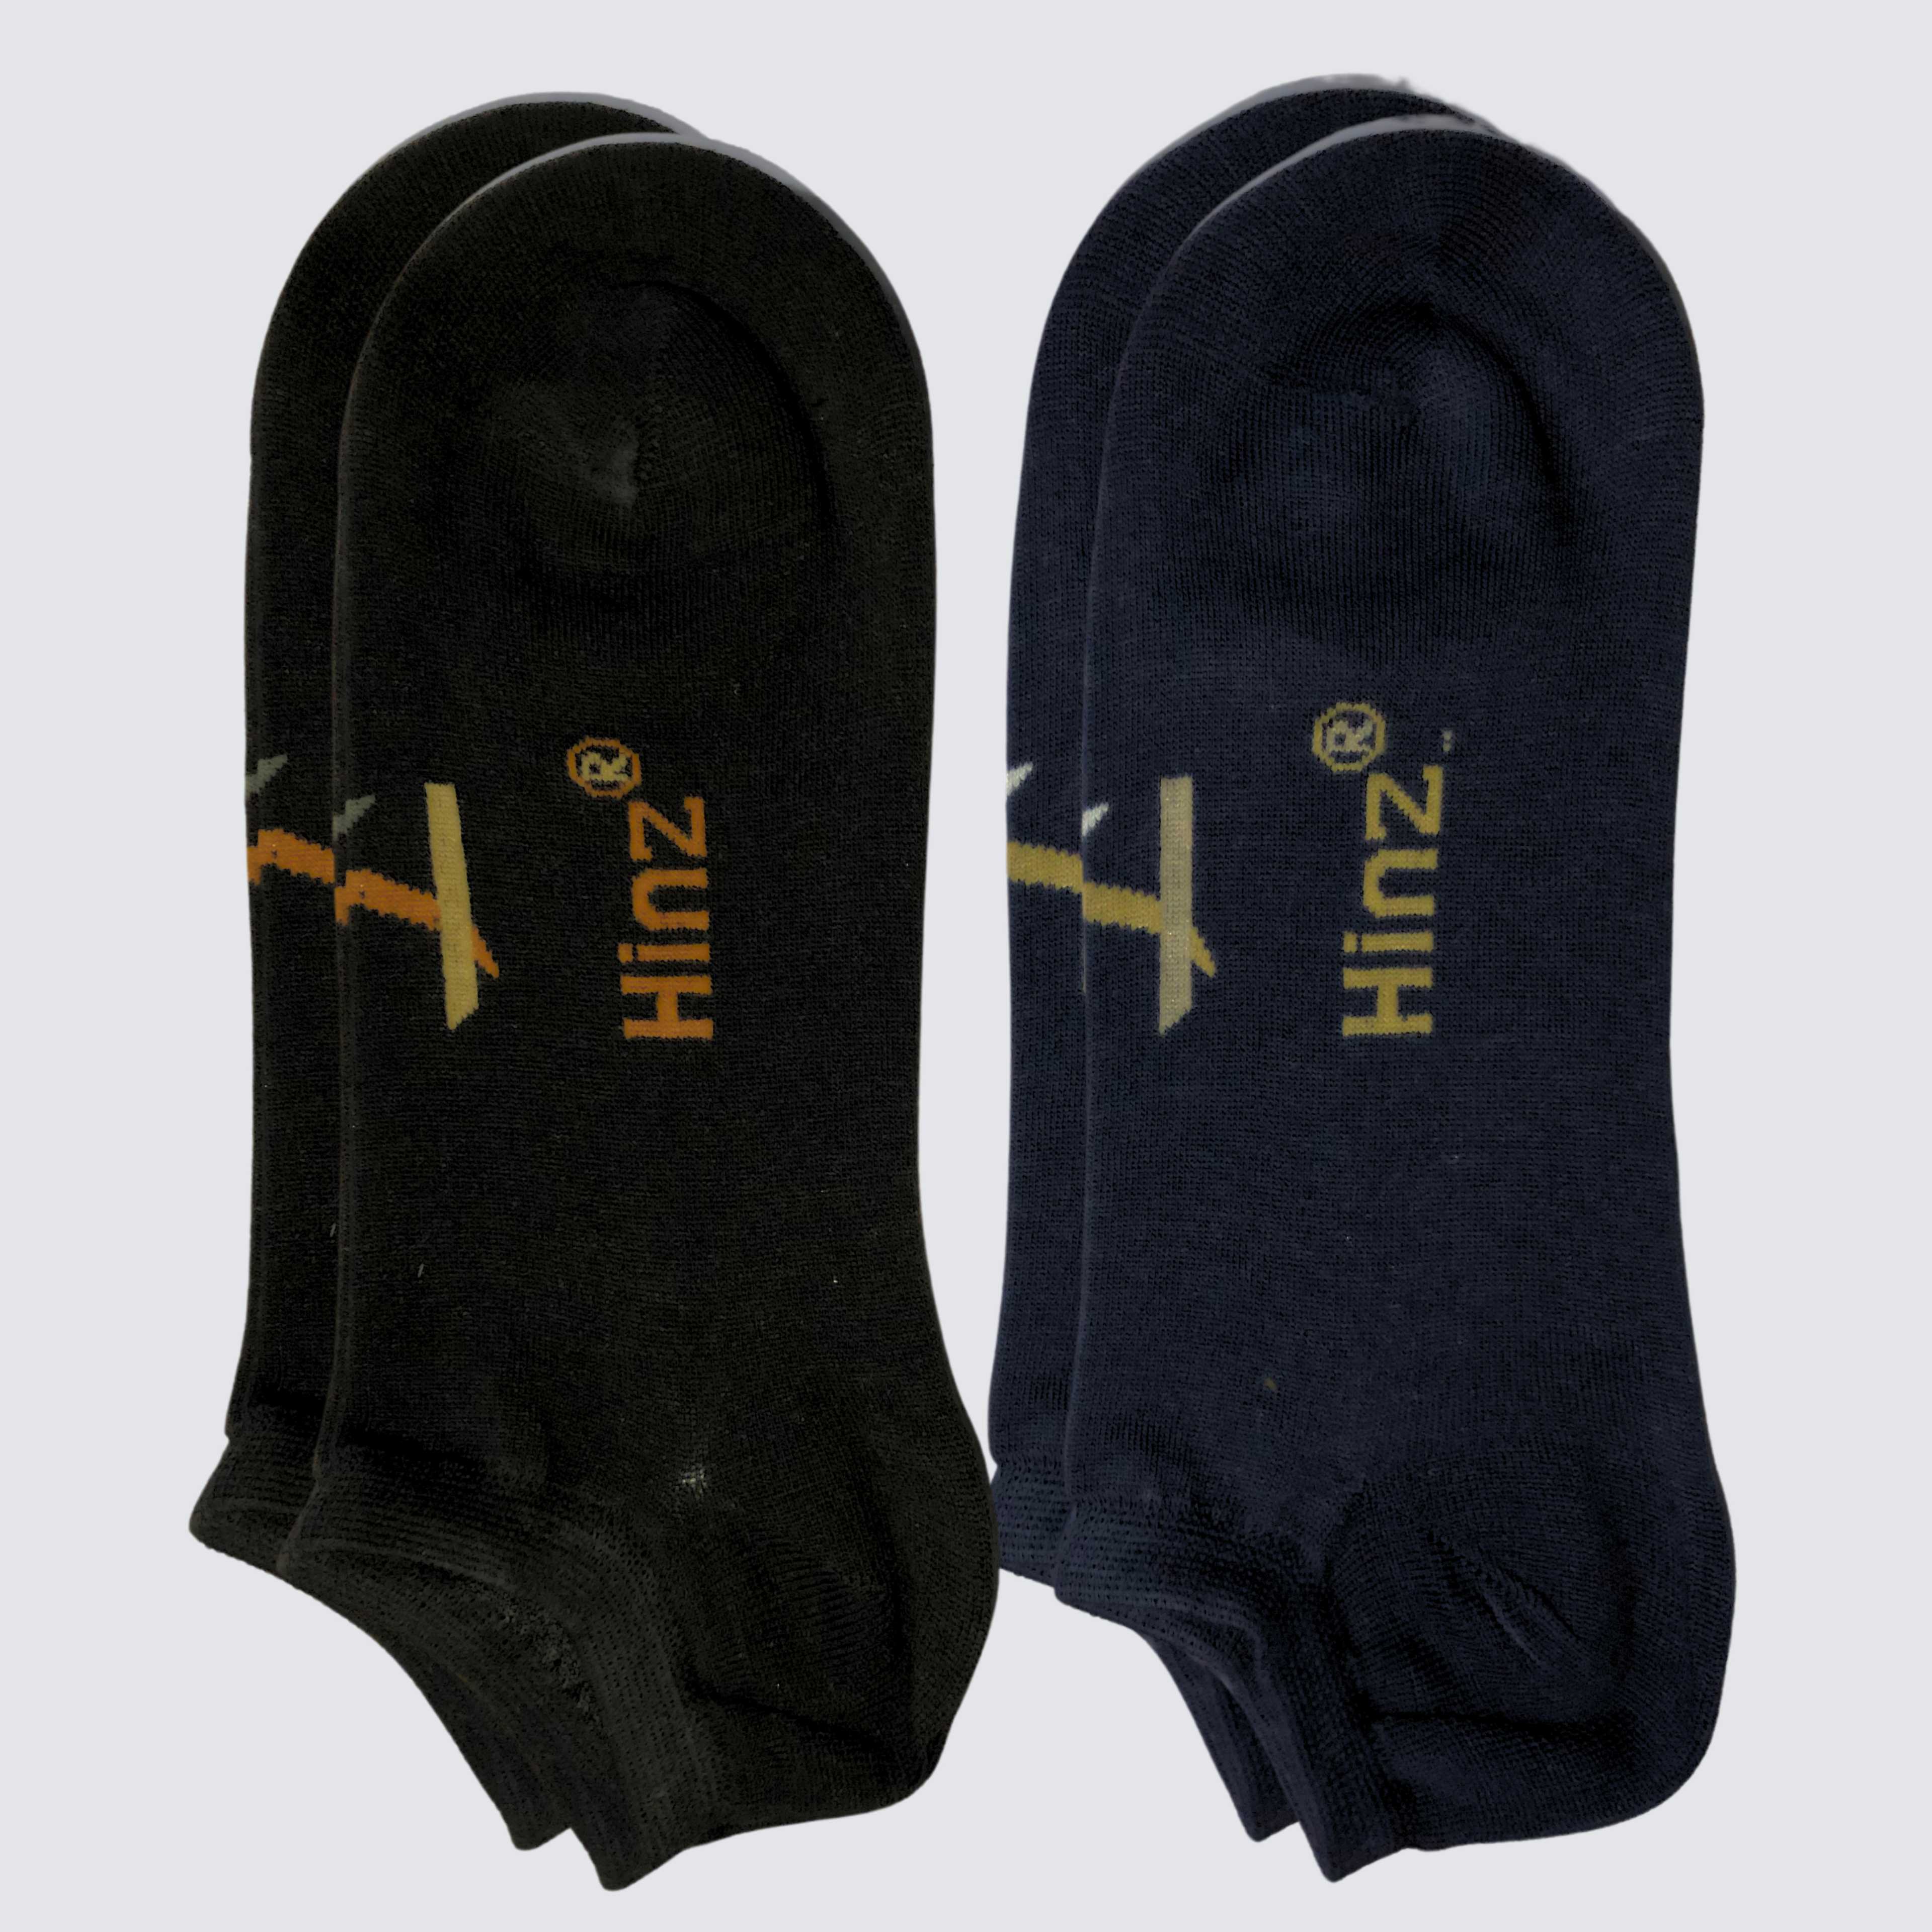 PREMIUM HINZ SNEAKER SOCKS PACK OF 4 (BLACK & BLUE)